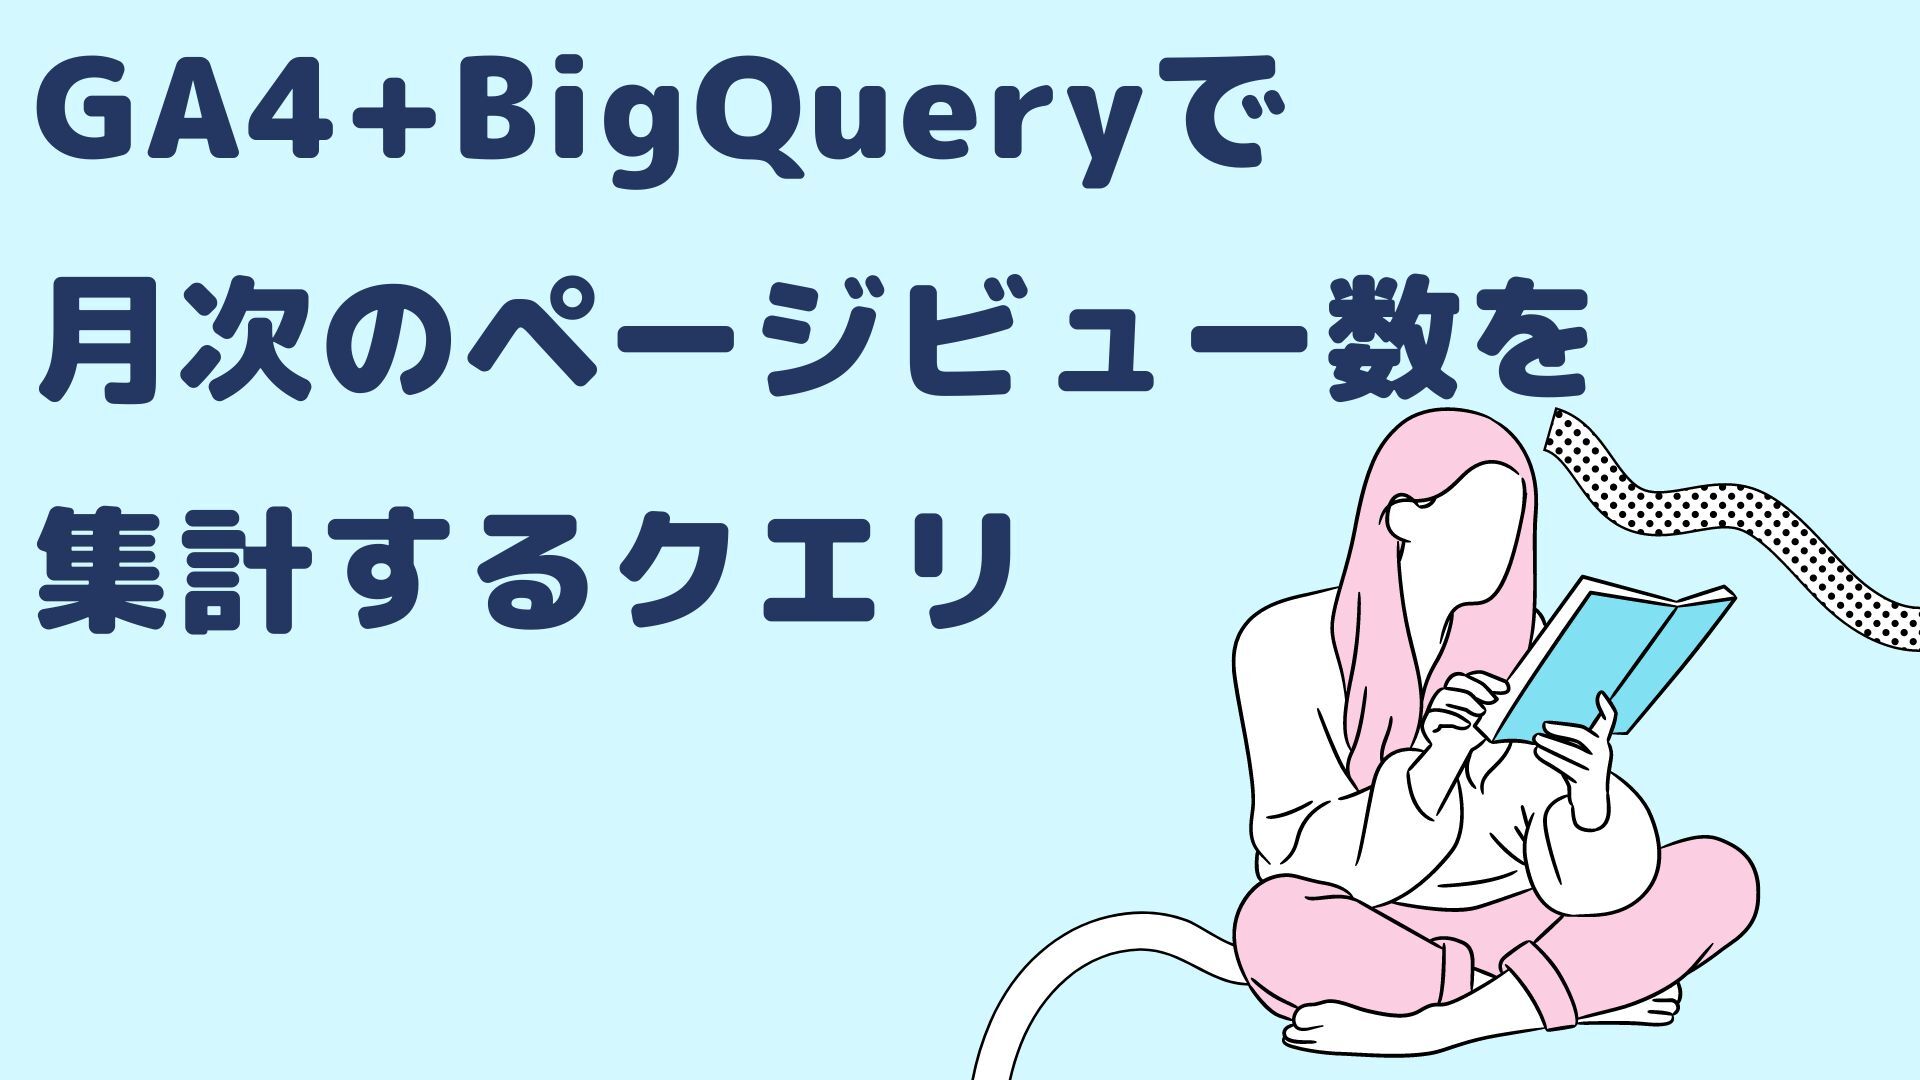 GA4+BigQueryで月次のページビュー数を集計するクエリ